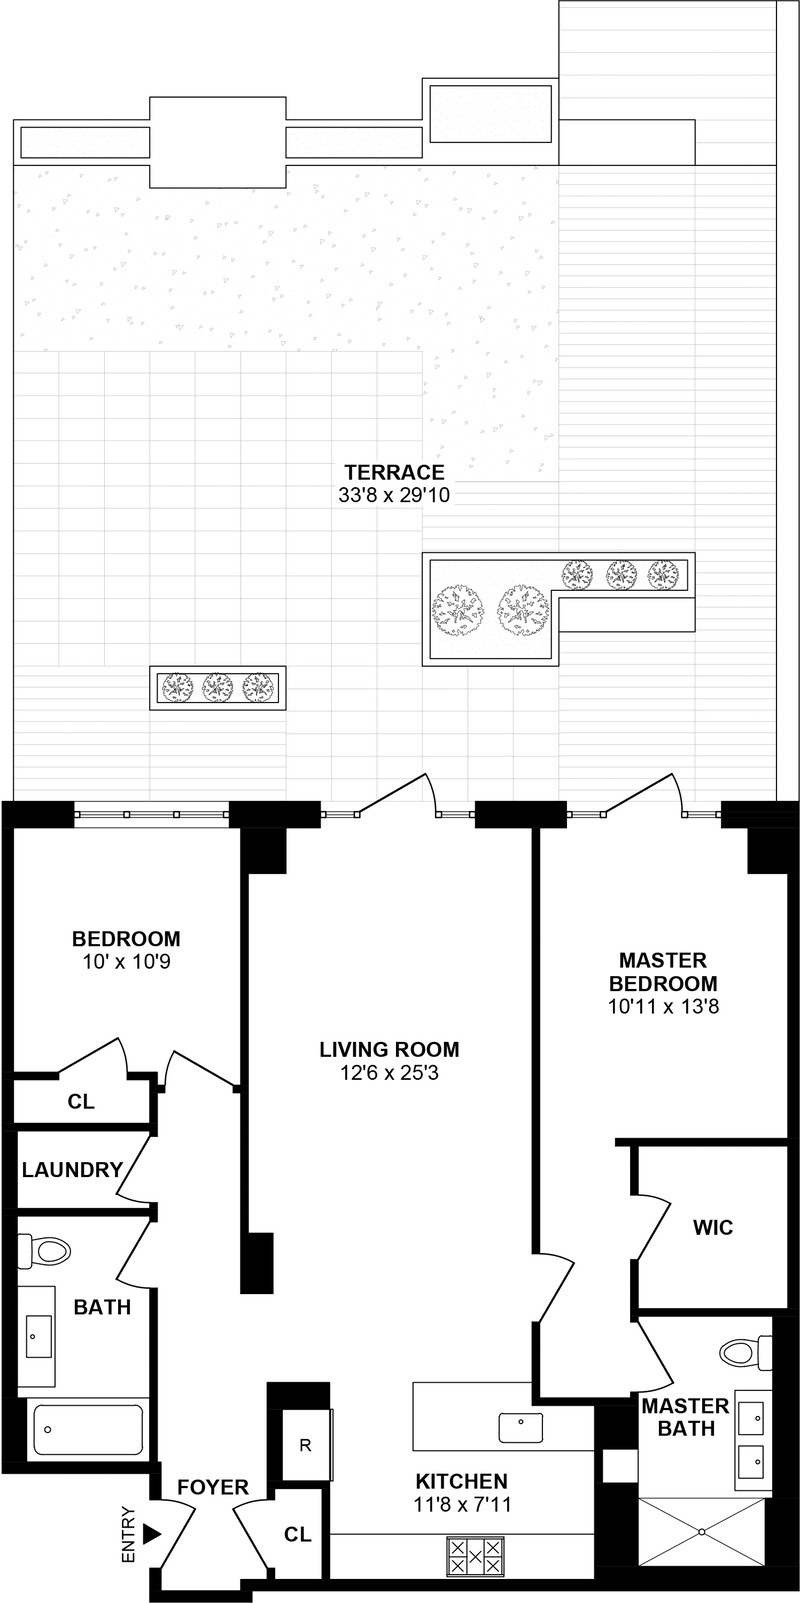 Floorplan for 205 Water Street, 2B